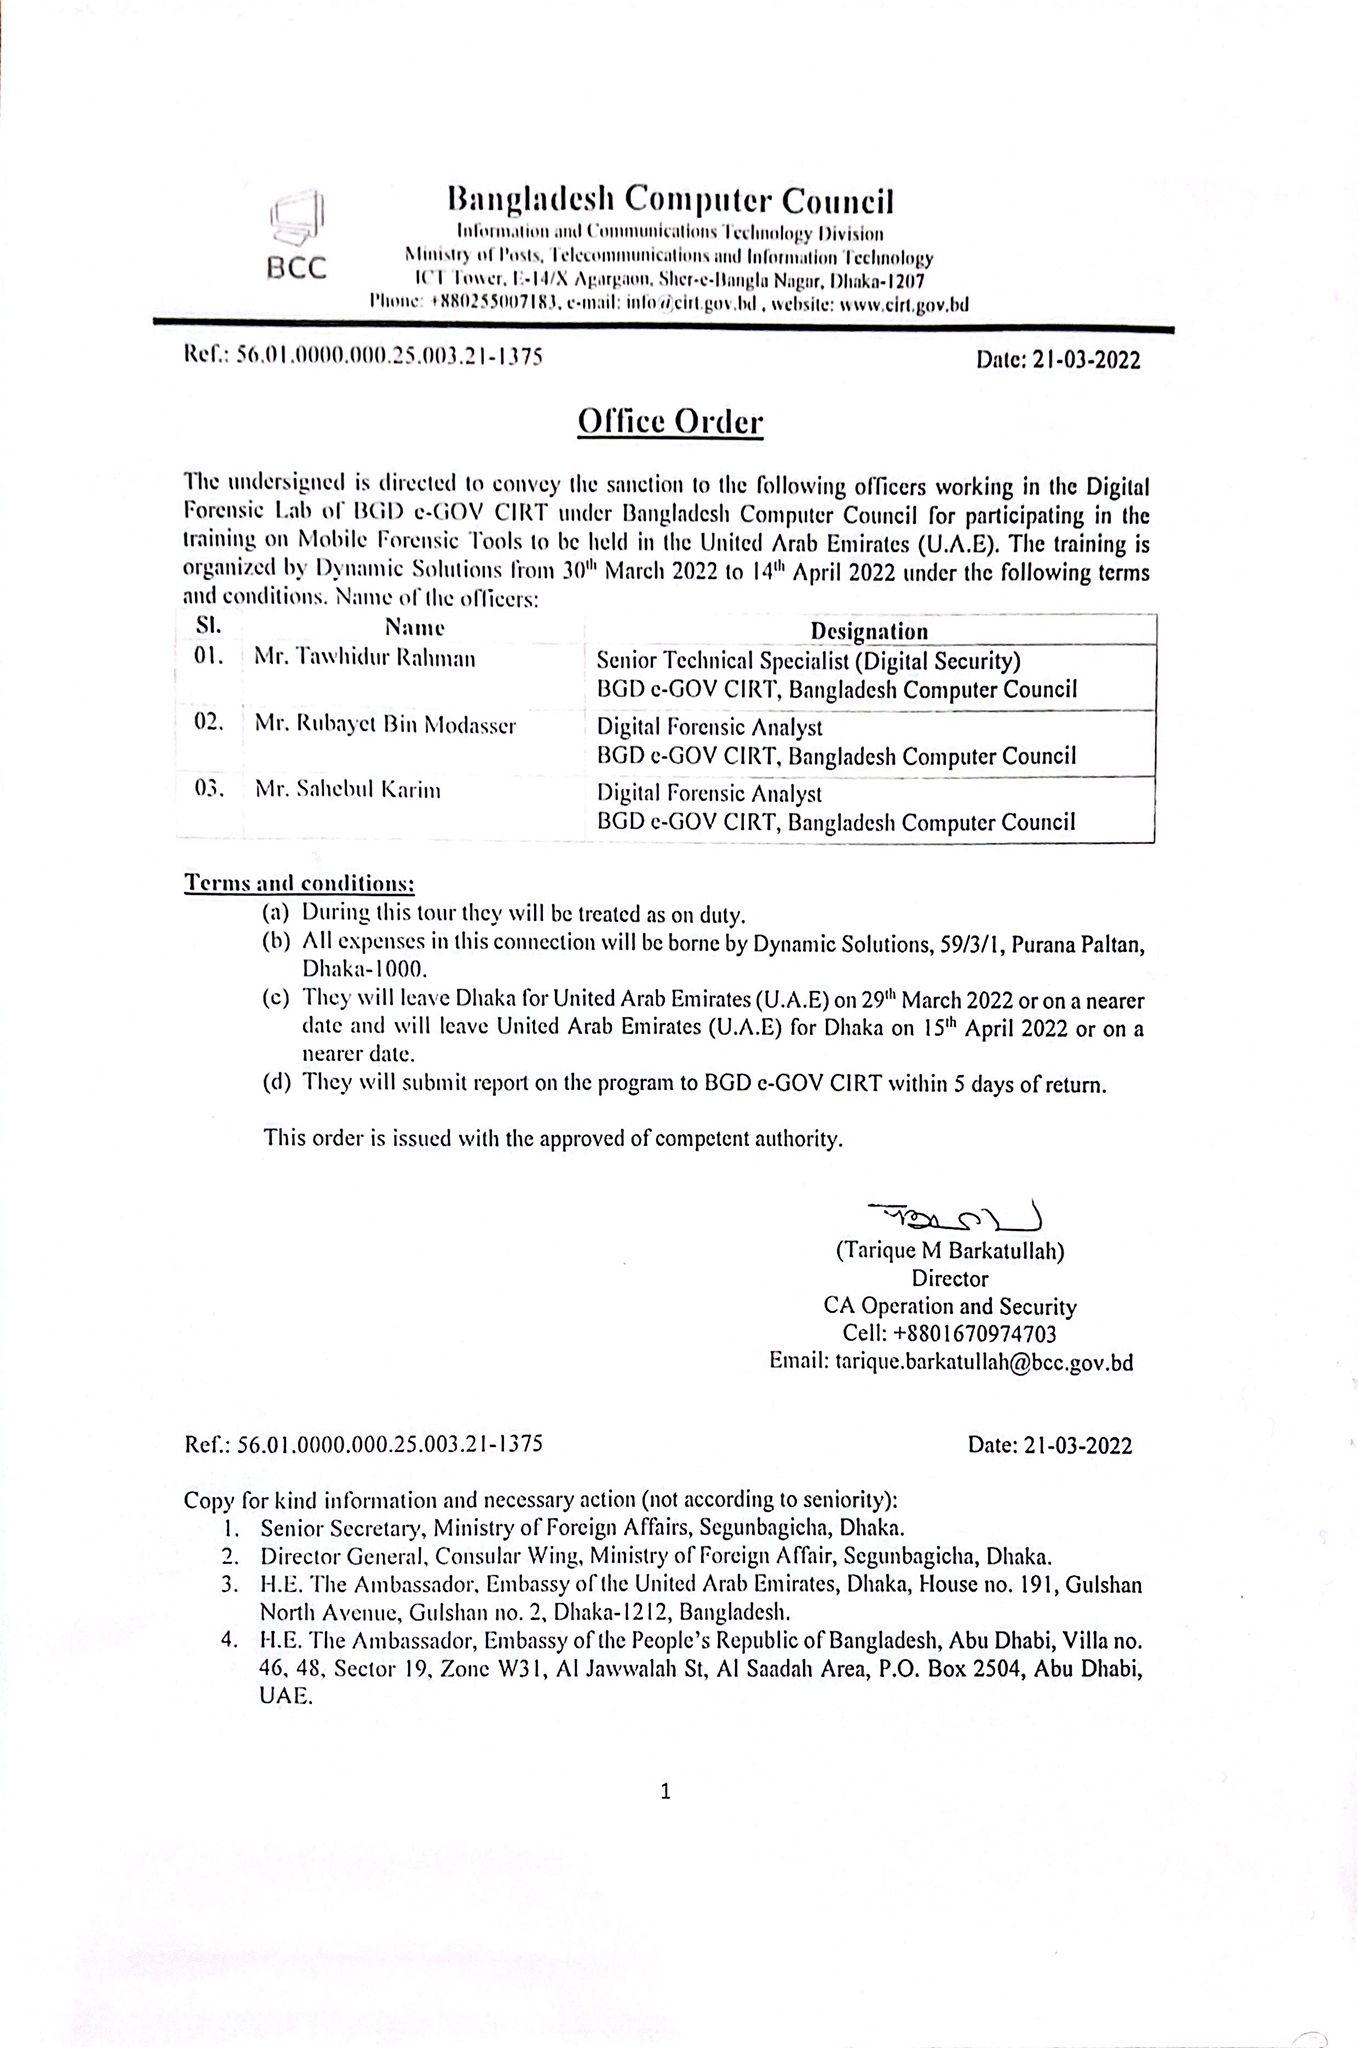 Office Order for Officers of BGD e-GOV CIRT